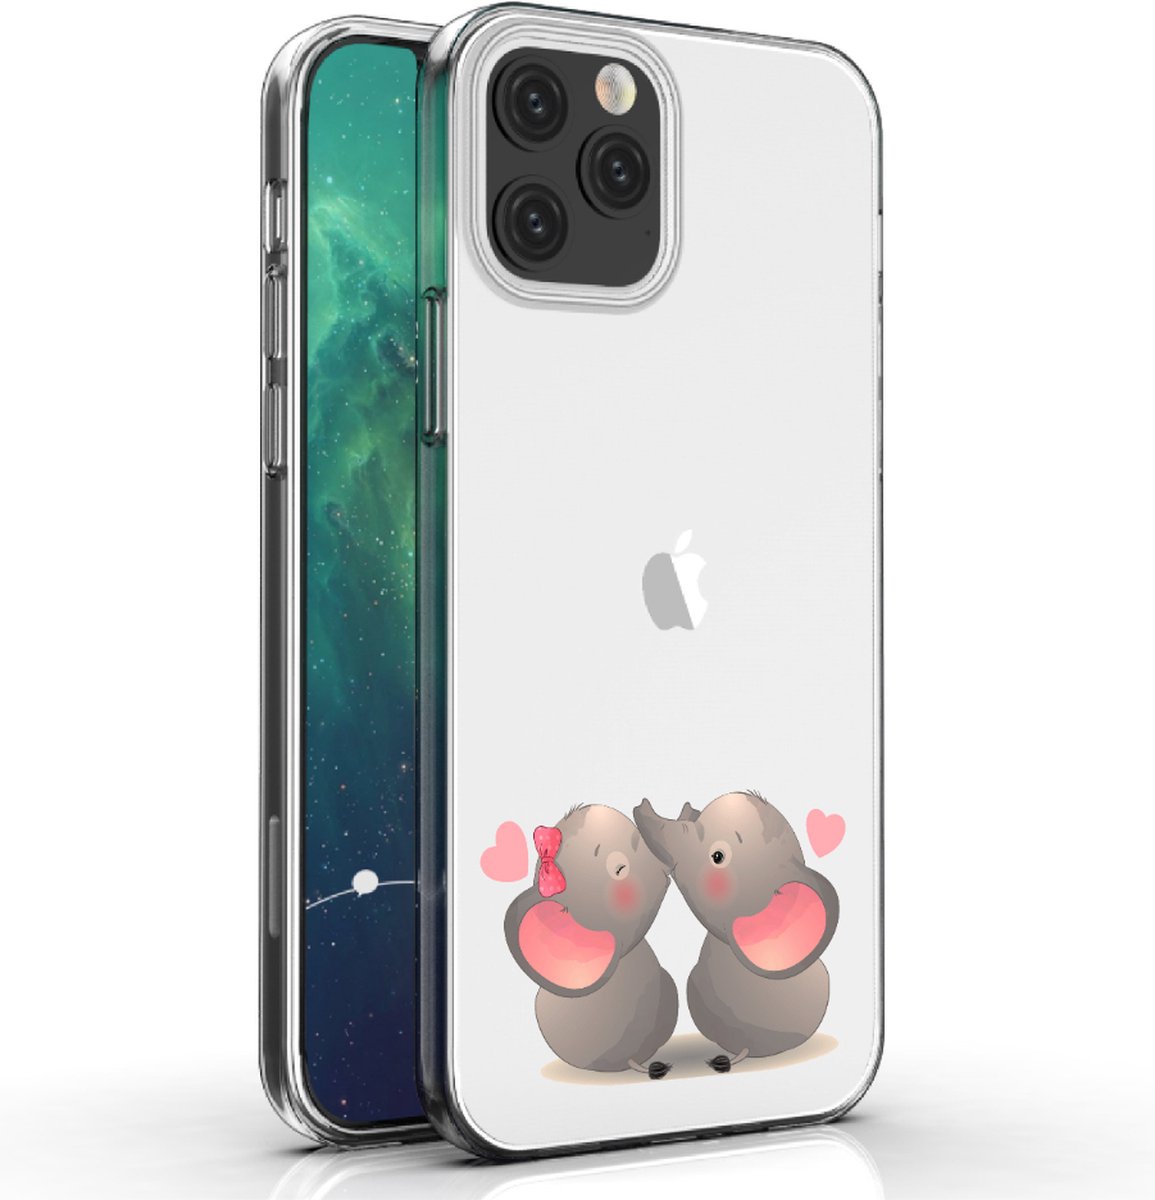 Apple Iphone 12 Pro Max telefoonhoesje transparant siliconen hoesje - Olifantjes